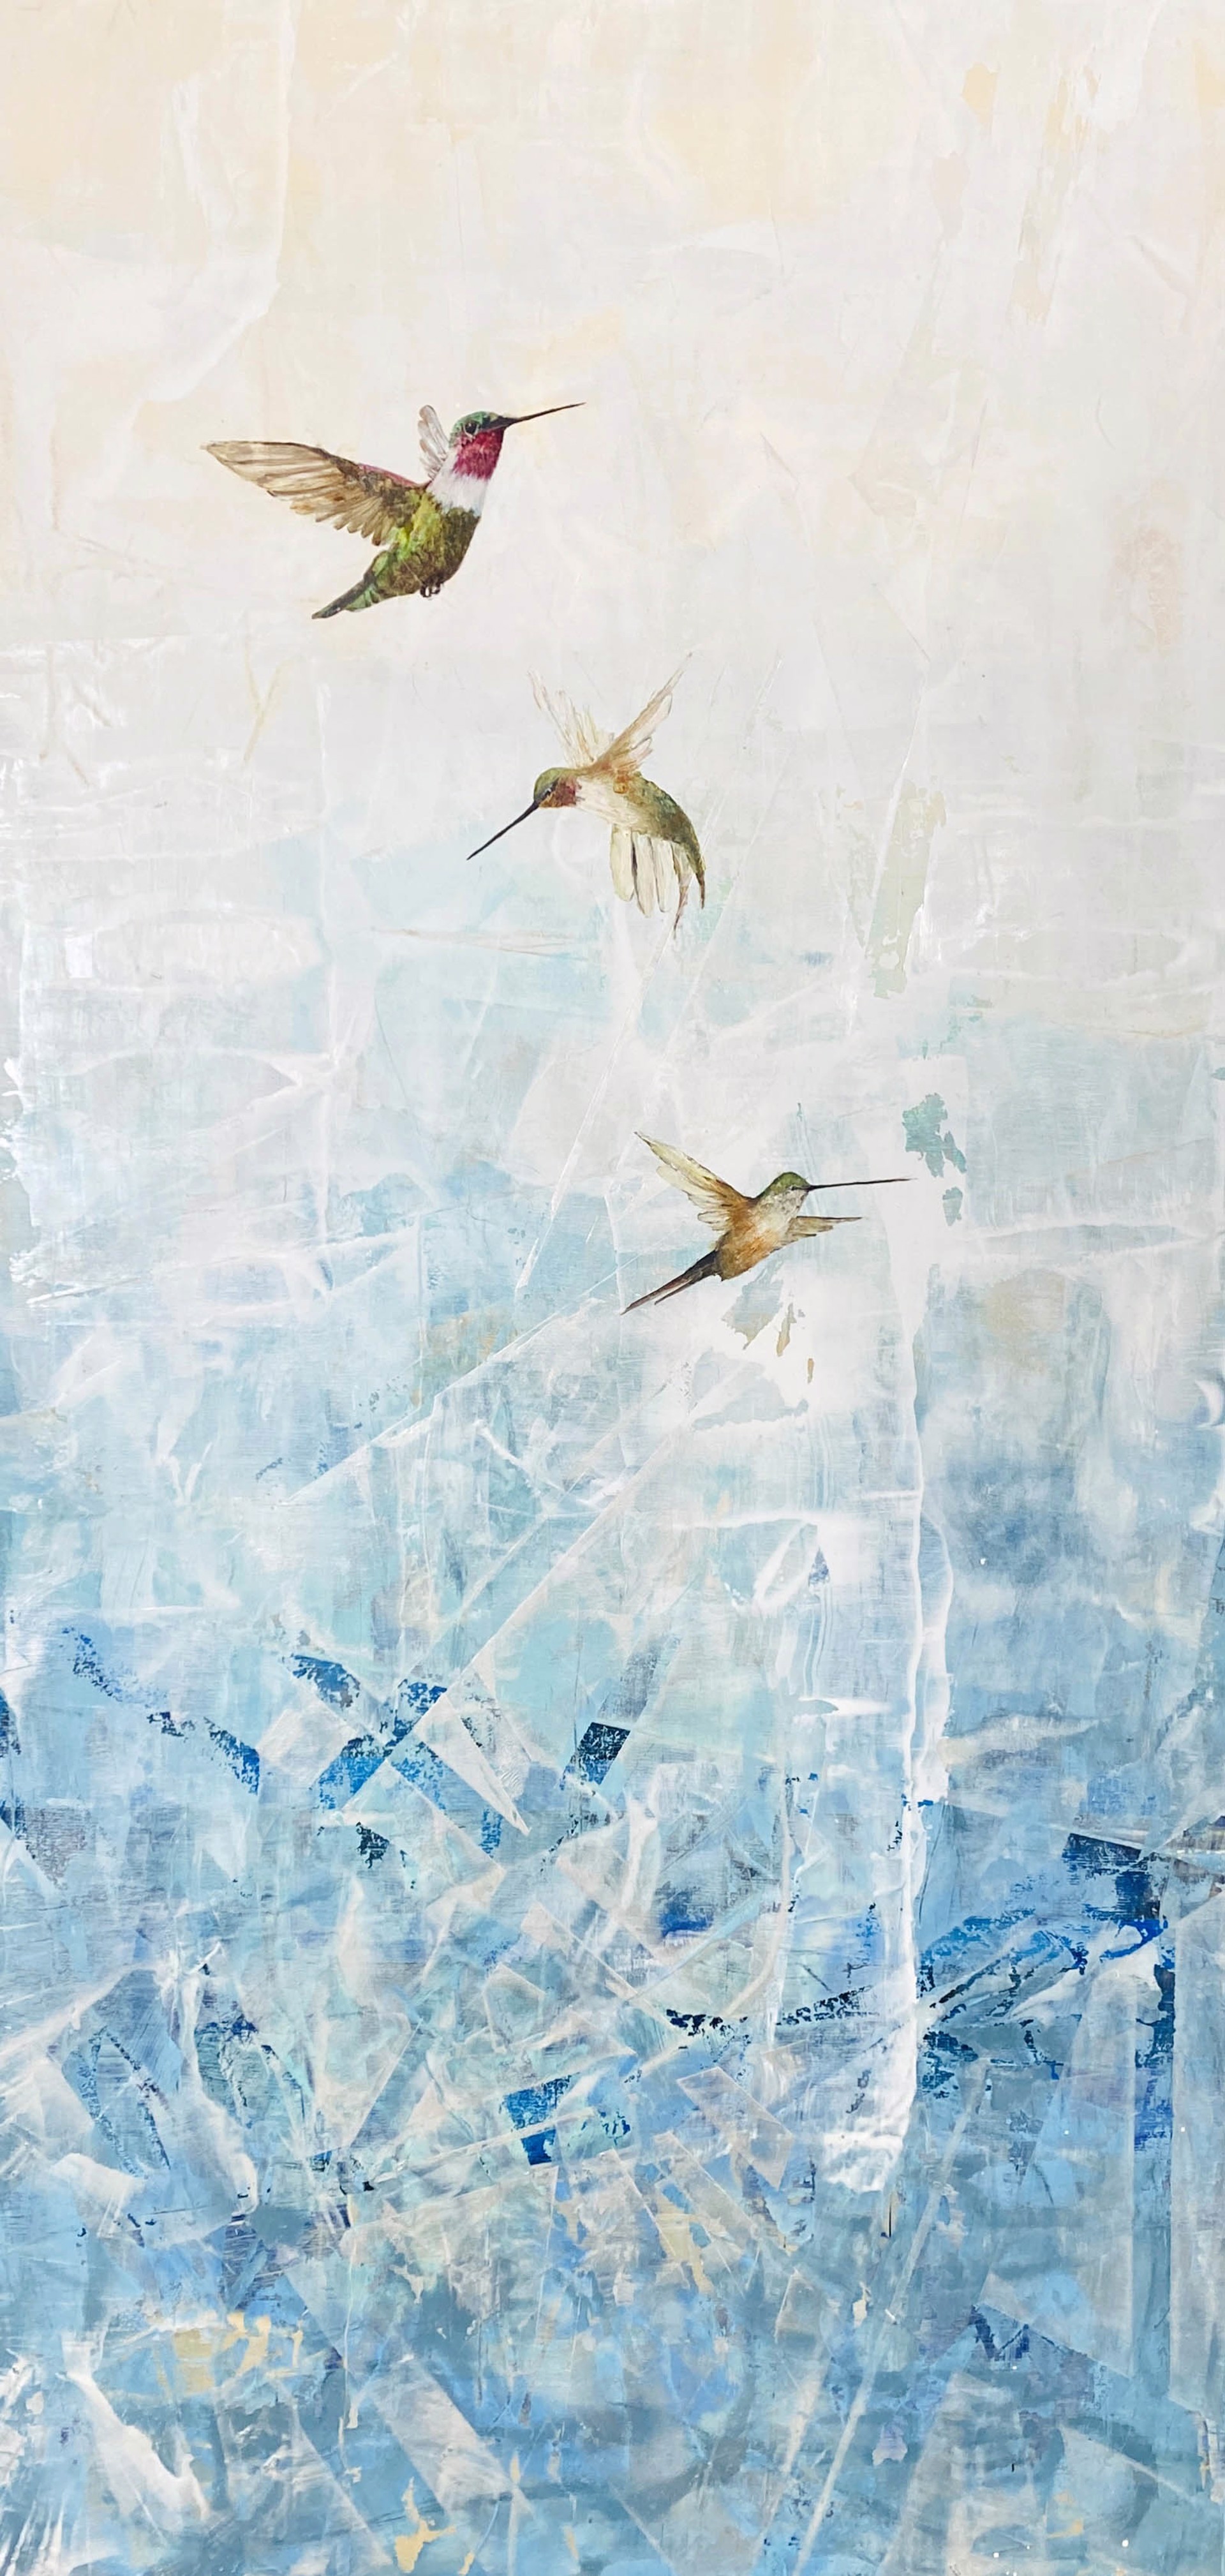 Original Oil Painting By Jenna Von Benedikt Featuring Three Hummingbirds In Flight Over Abstract Background In Blue Gradient